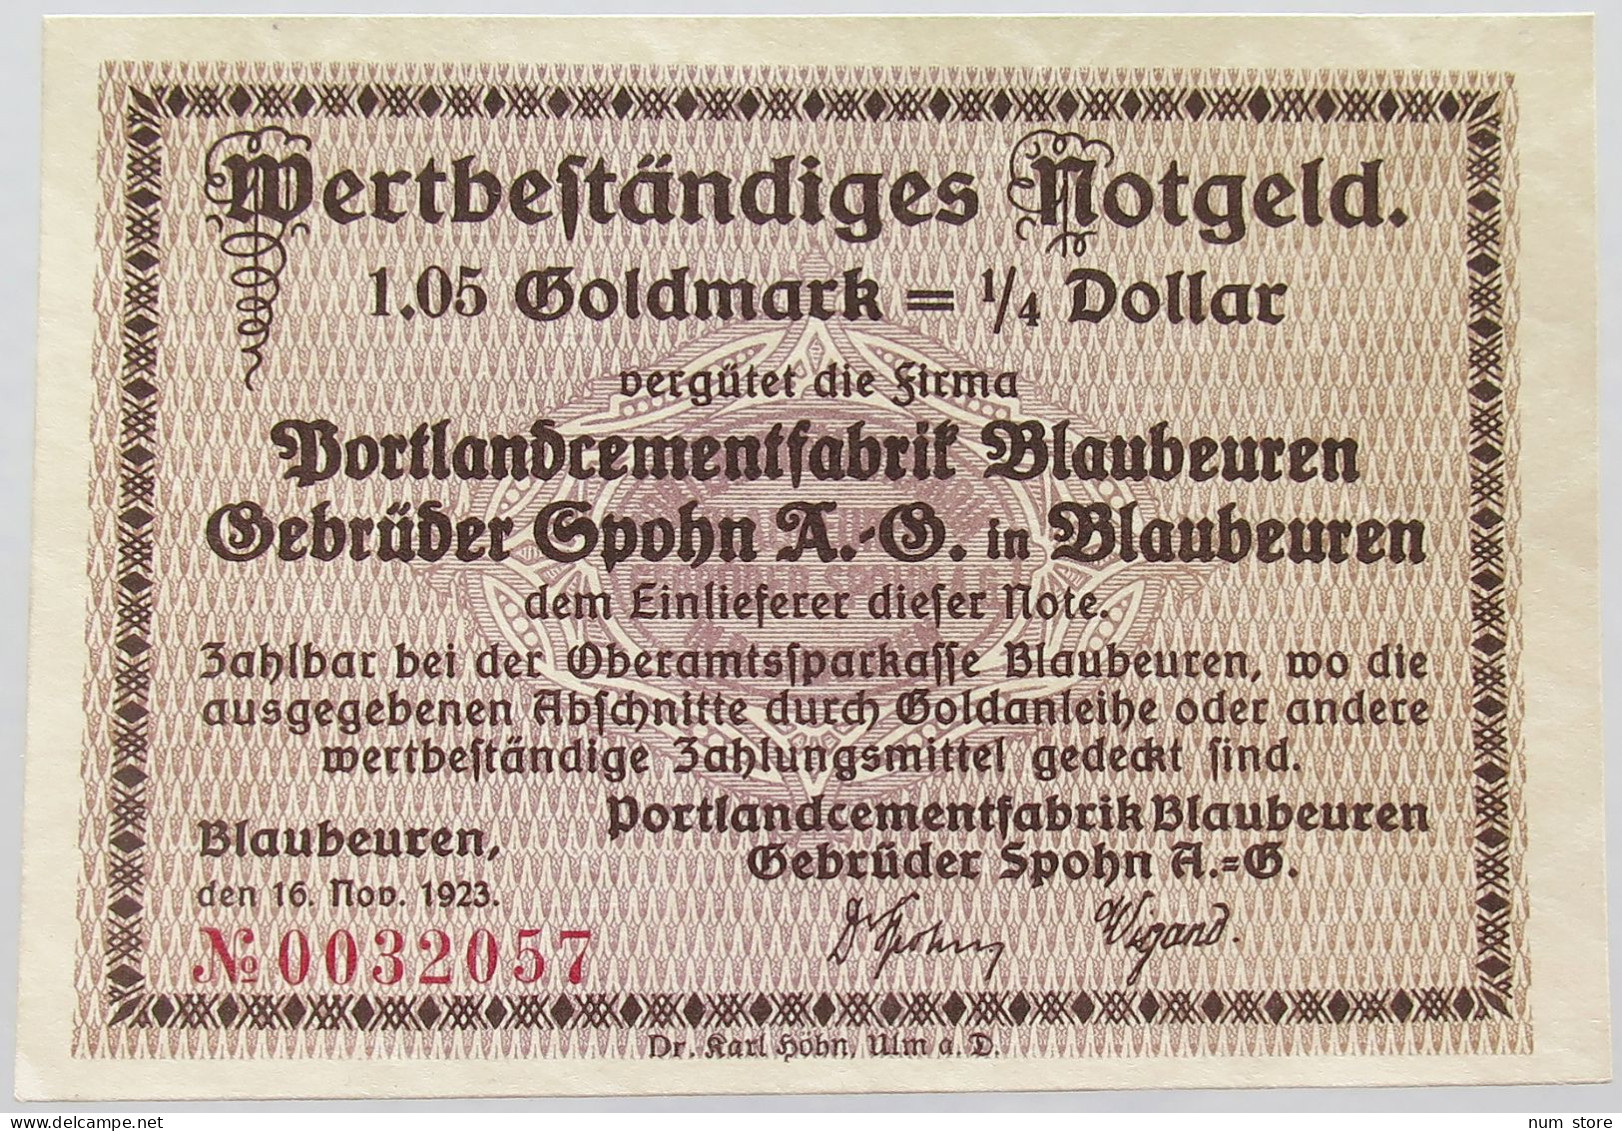 GERMANY 1.05 GOLDMARK 1/4 DOLLAR 1923 BLAUBEUREN #alb002 0239 - Deutsche Golddiskontbank